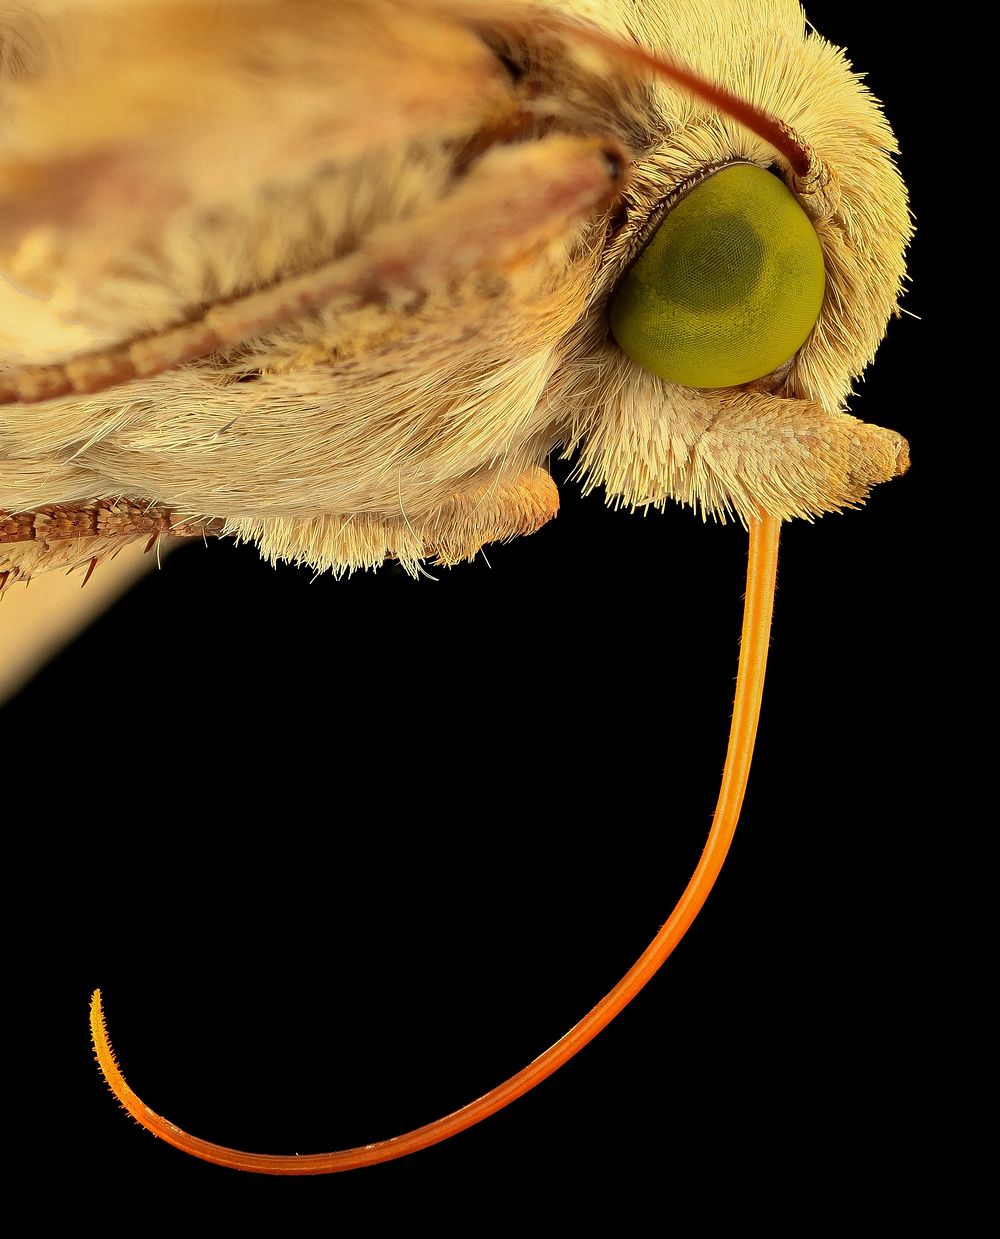 Corn earworm, moth, face